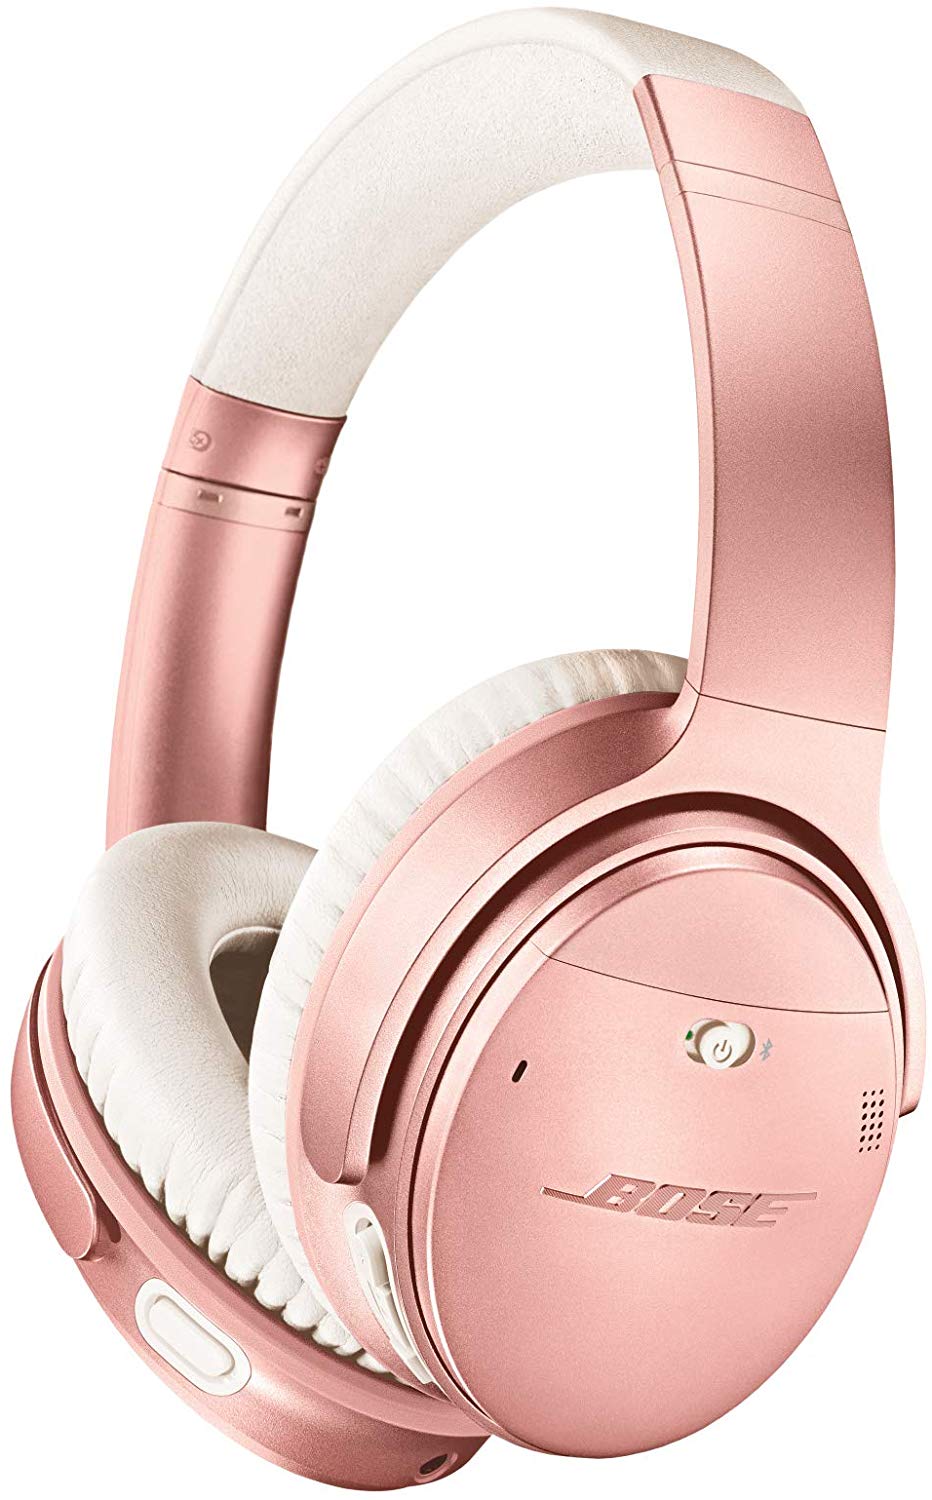 Deal Alert: Bose QC 35 II wireless headphones discounted at amazon